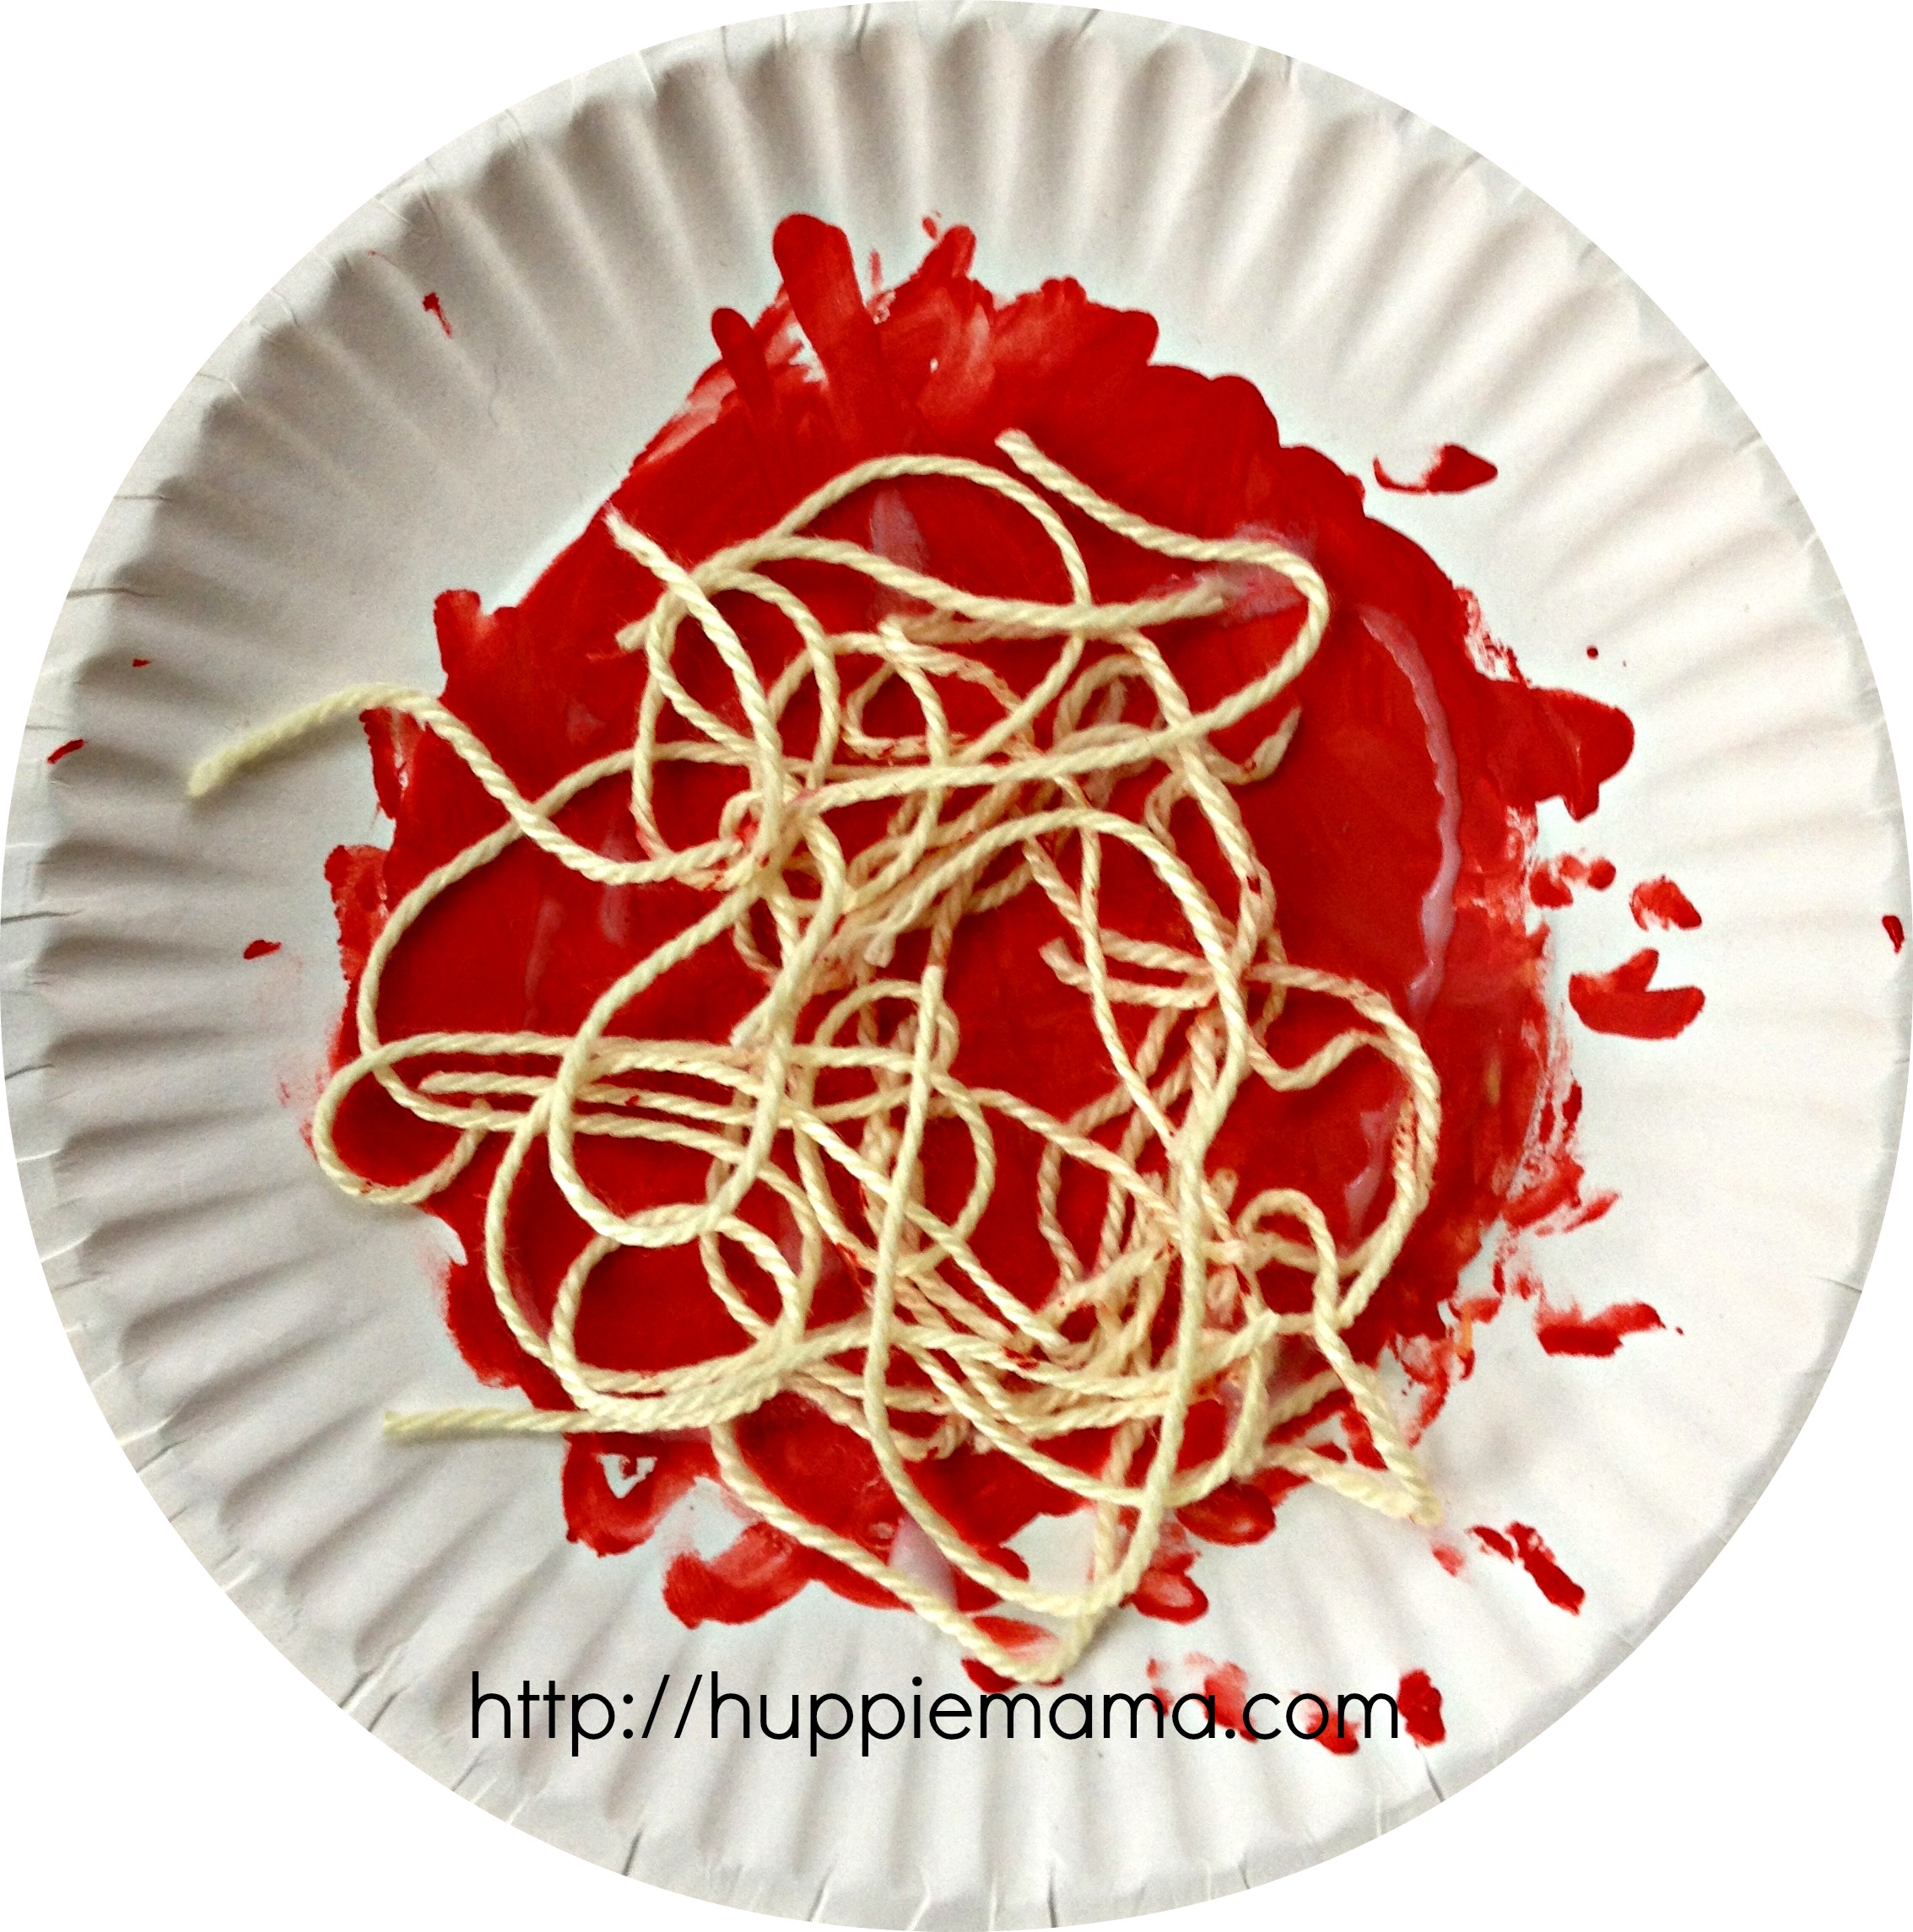 spaghetti art preschool